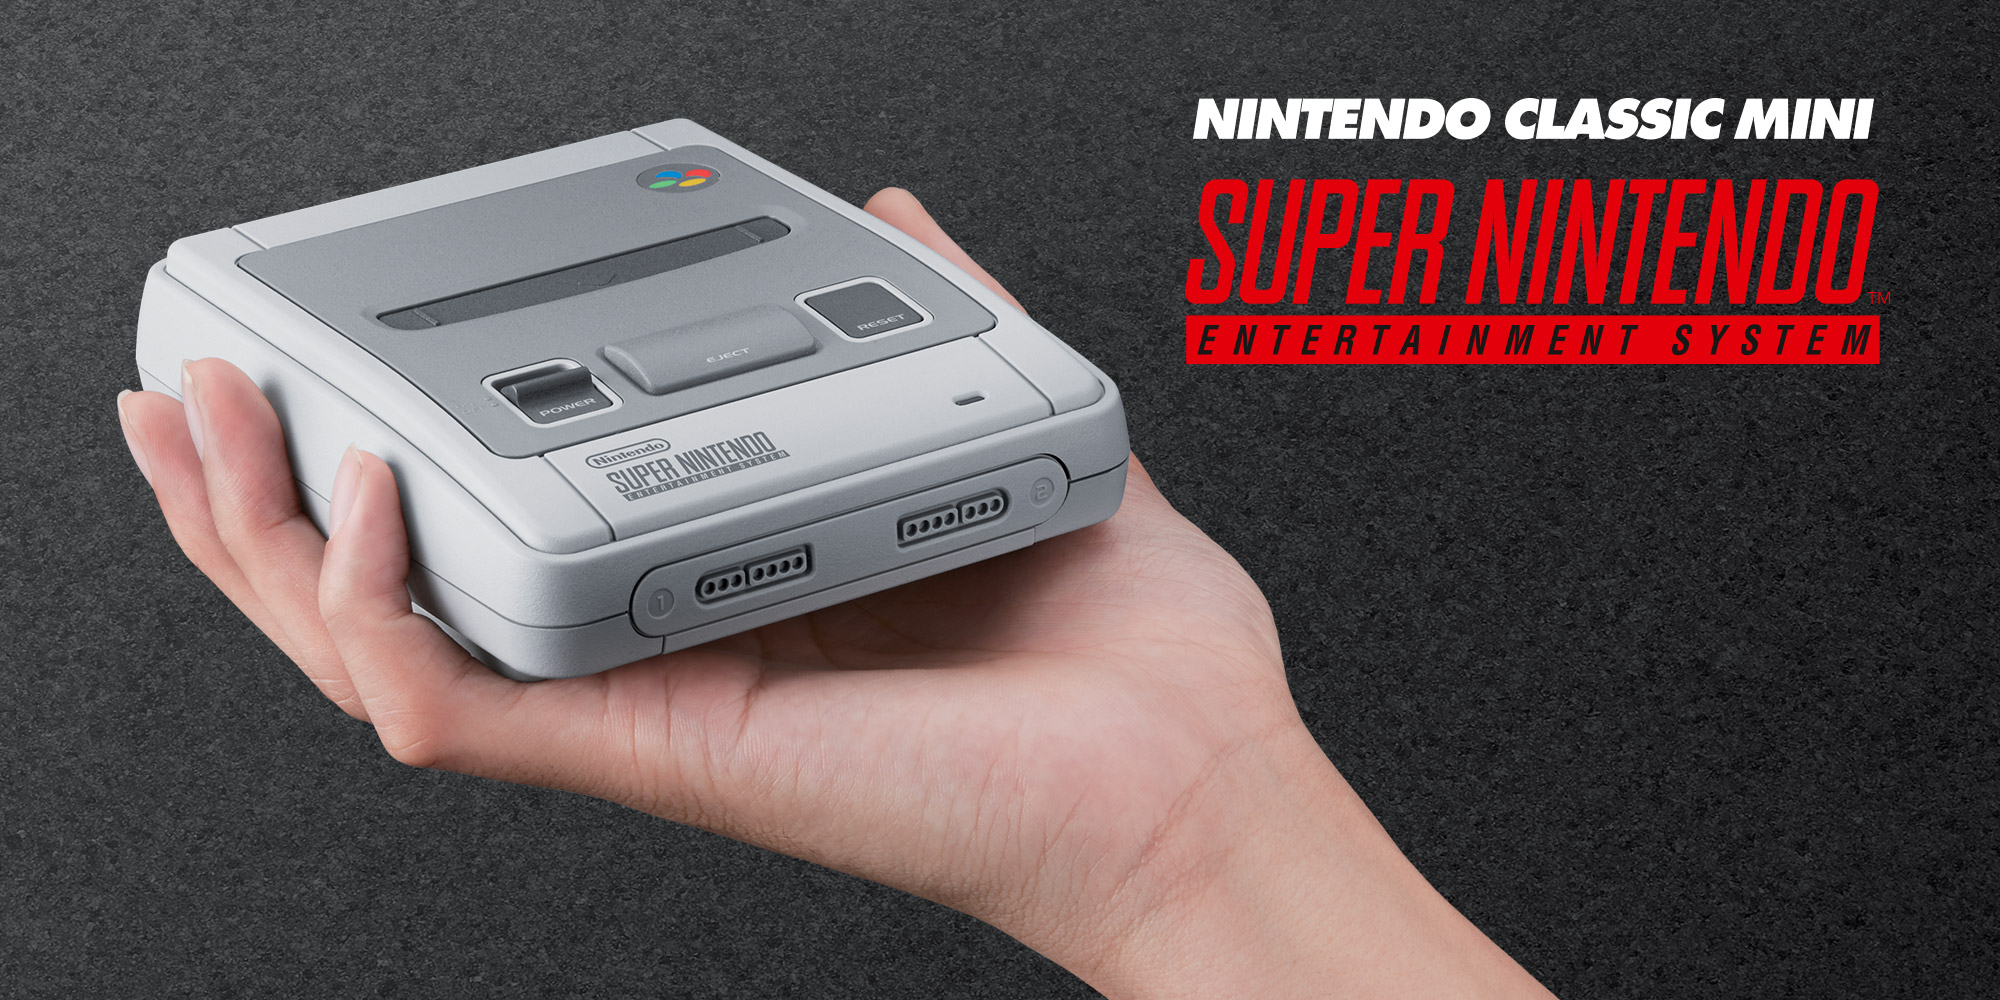 Nintendo announces the Nintendo Classic Mini: Super Nintendo Entertainment System